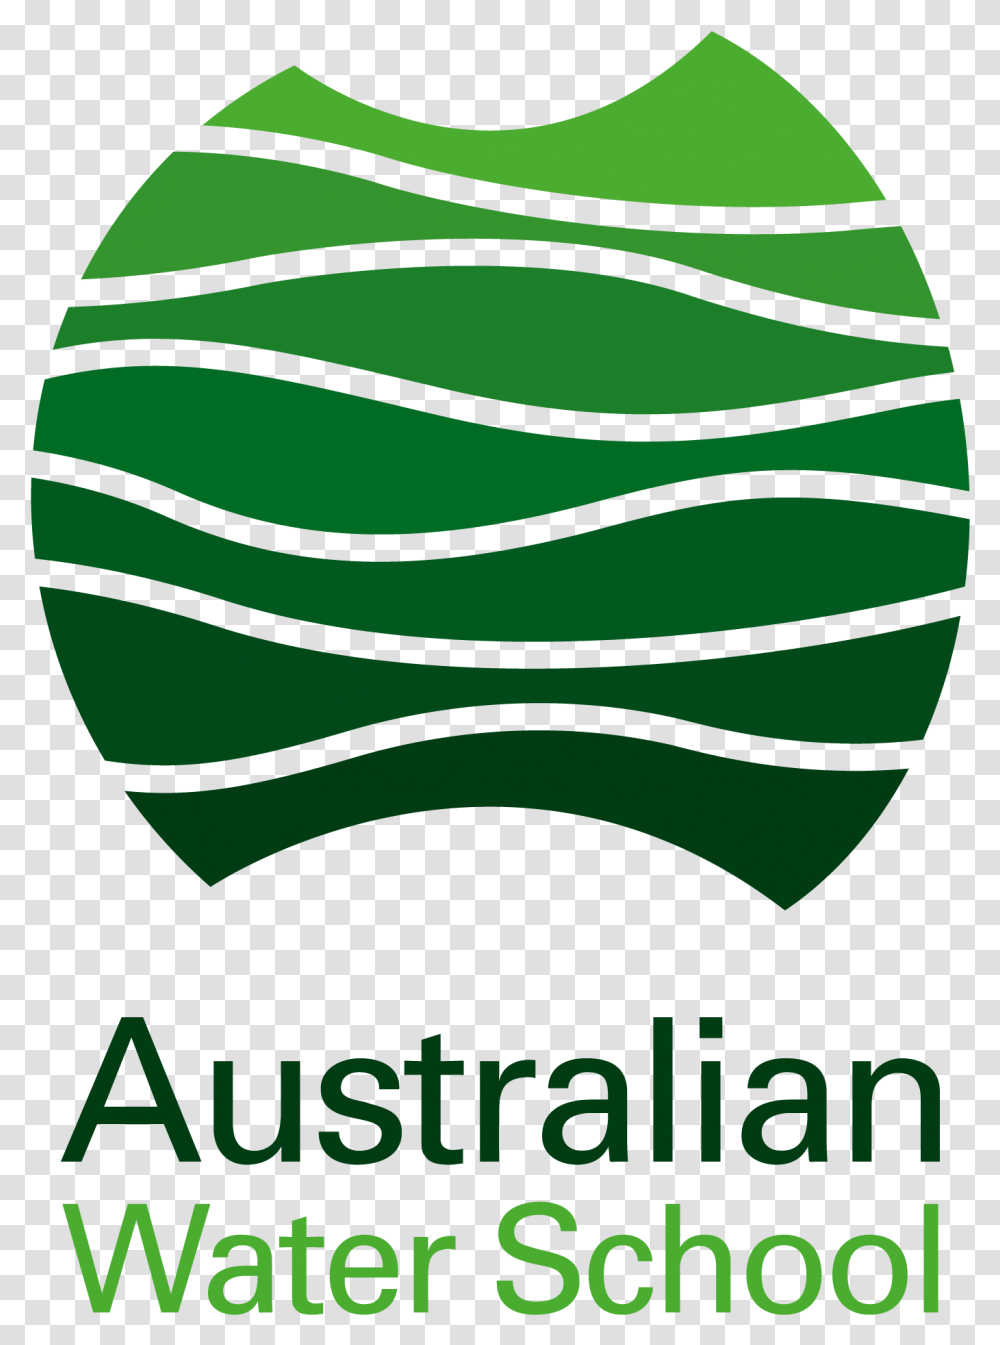 Aust Water School Vertical Alzheimer's Australia Vic Australia Vic, Poster, Clothing, Text, Hat Transparent Png